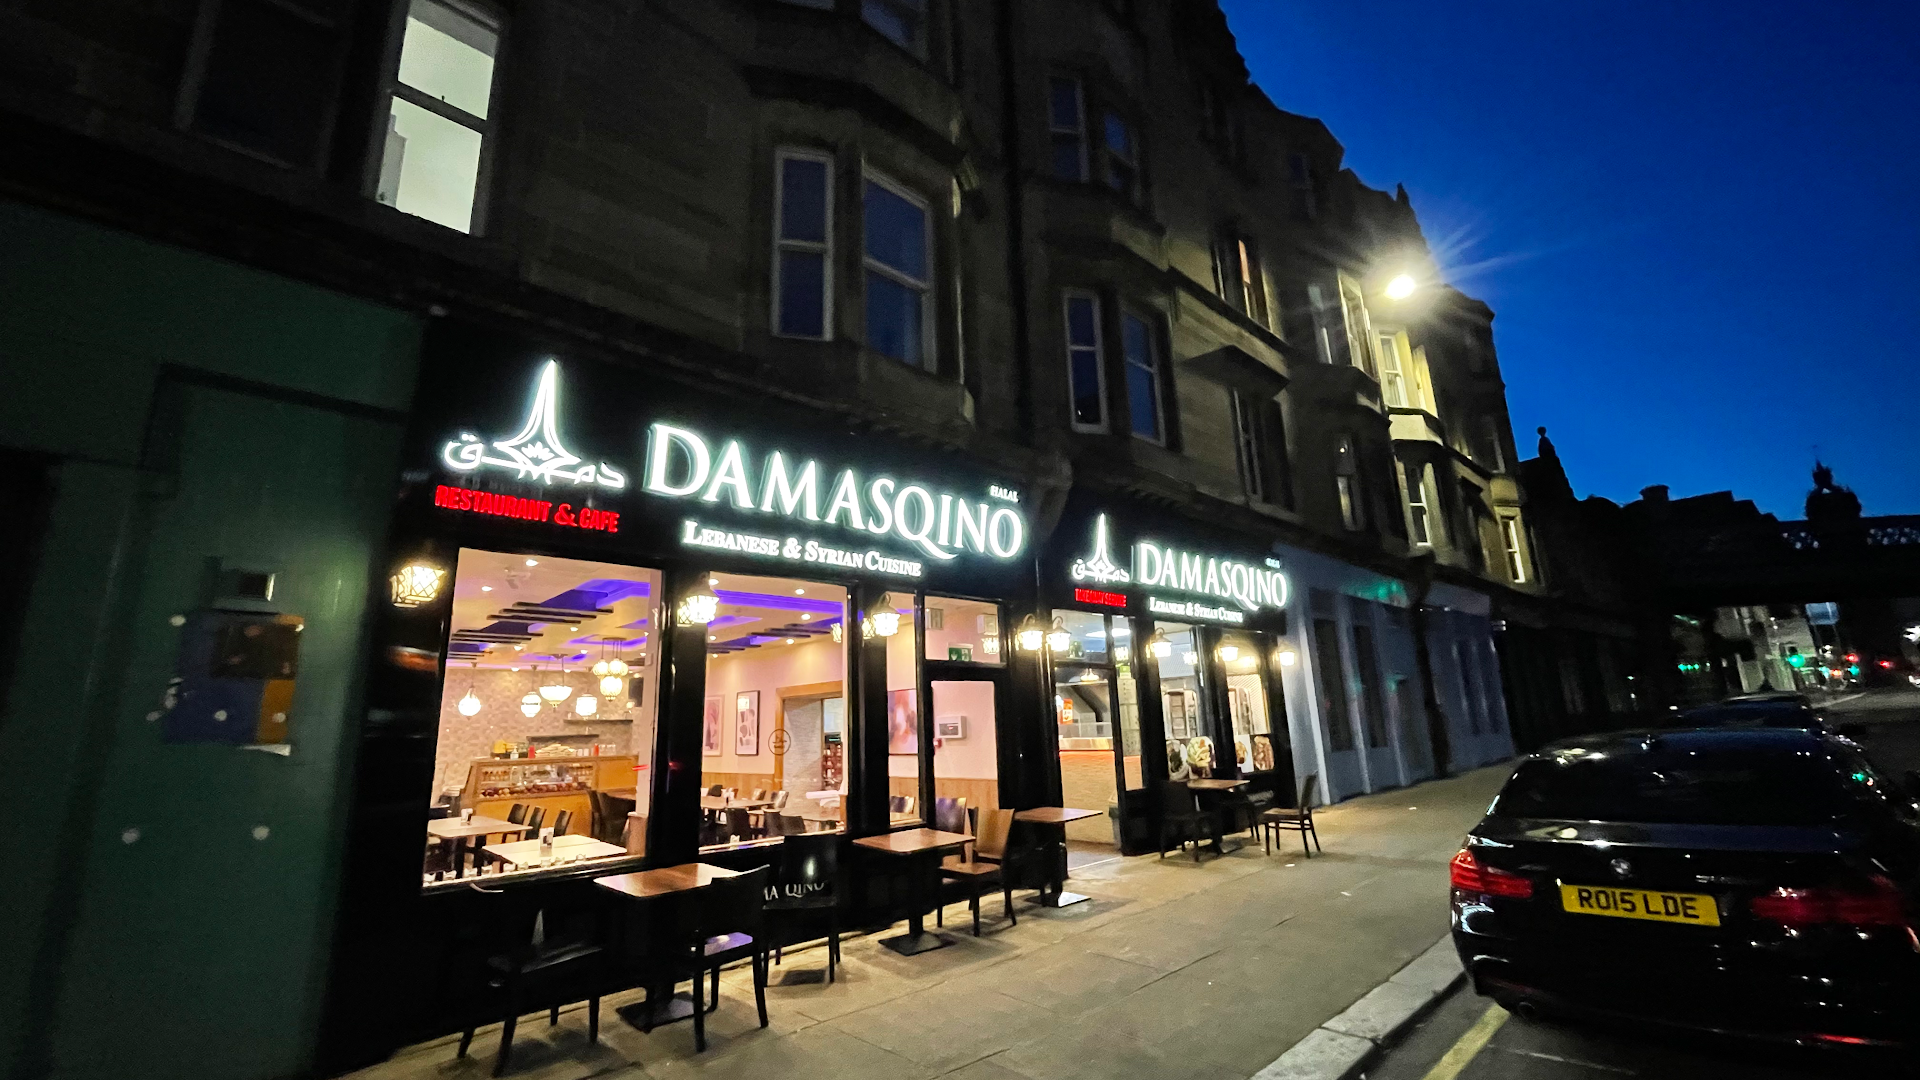 Damasqino Restaurant & Cafe: Authentic Lebanese & Syrian Cuisine in Glasgow